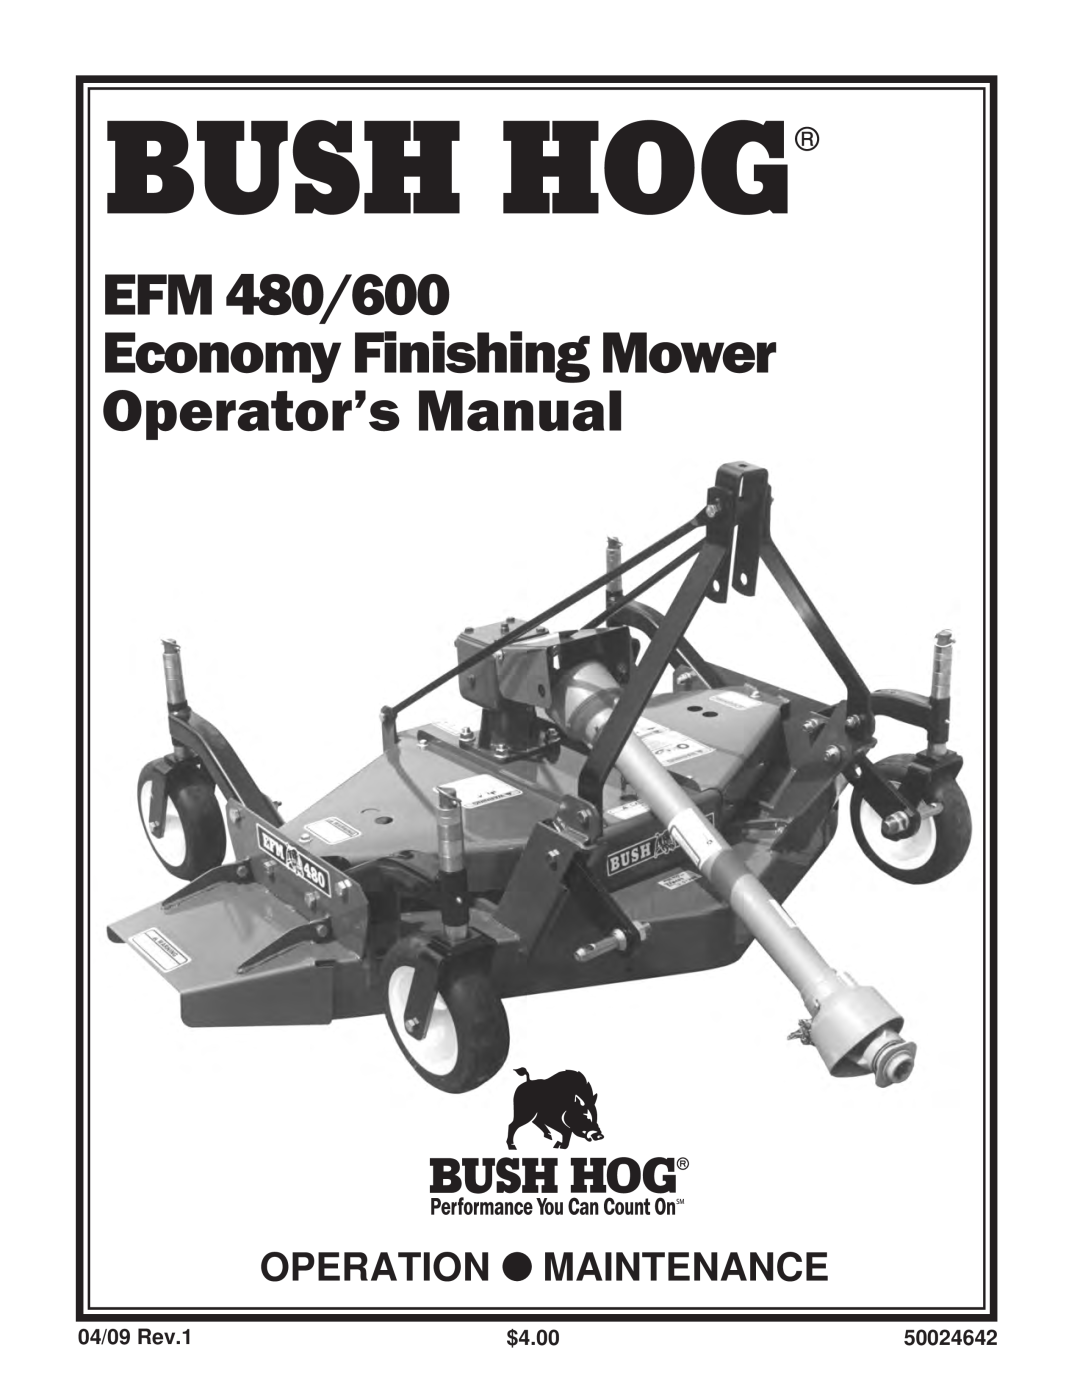 Bush Hog manual Bush Hog, EFM 480/600 Economy Finishing Mower Operator’s Manual, Operation Maintenance 